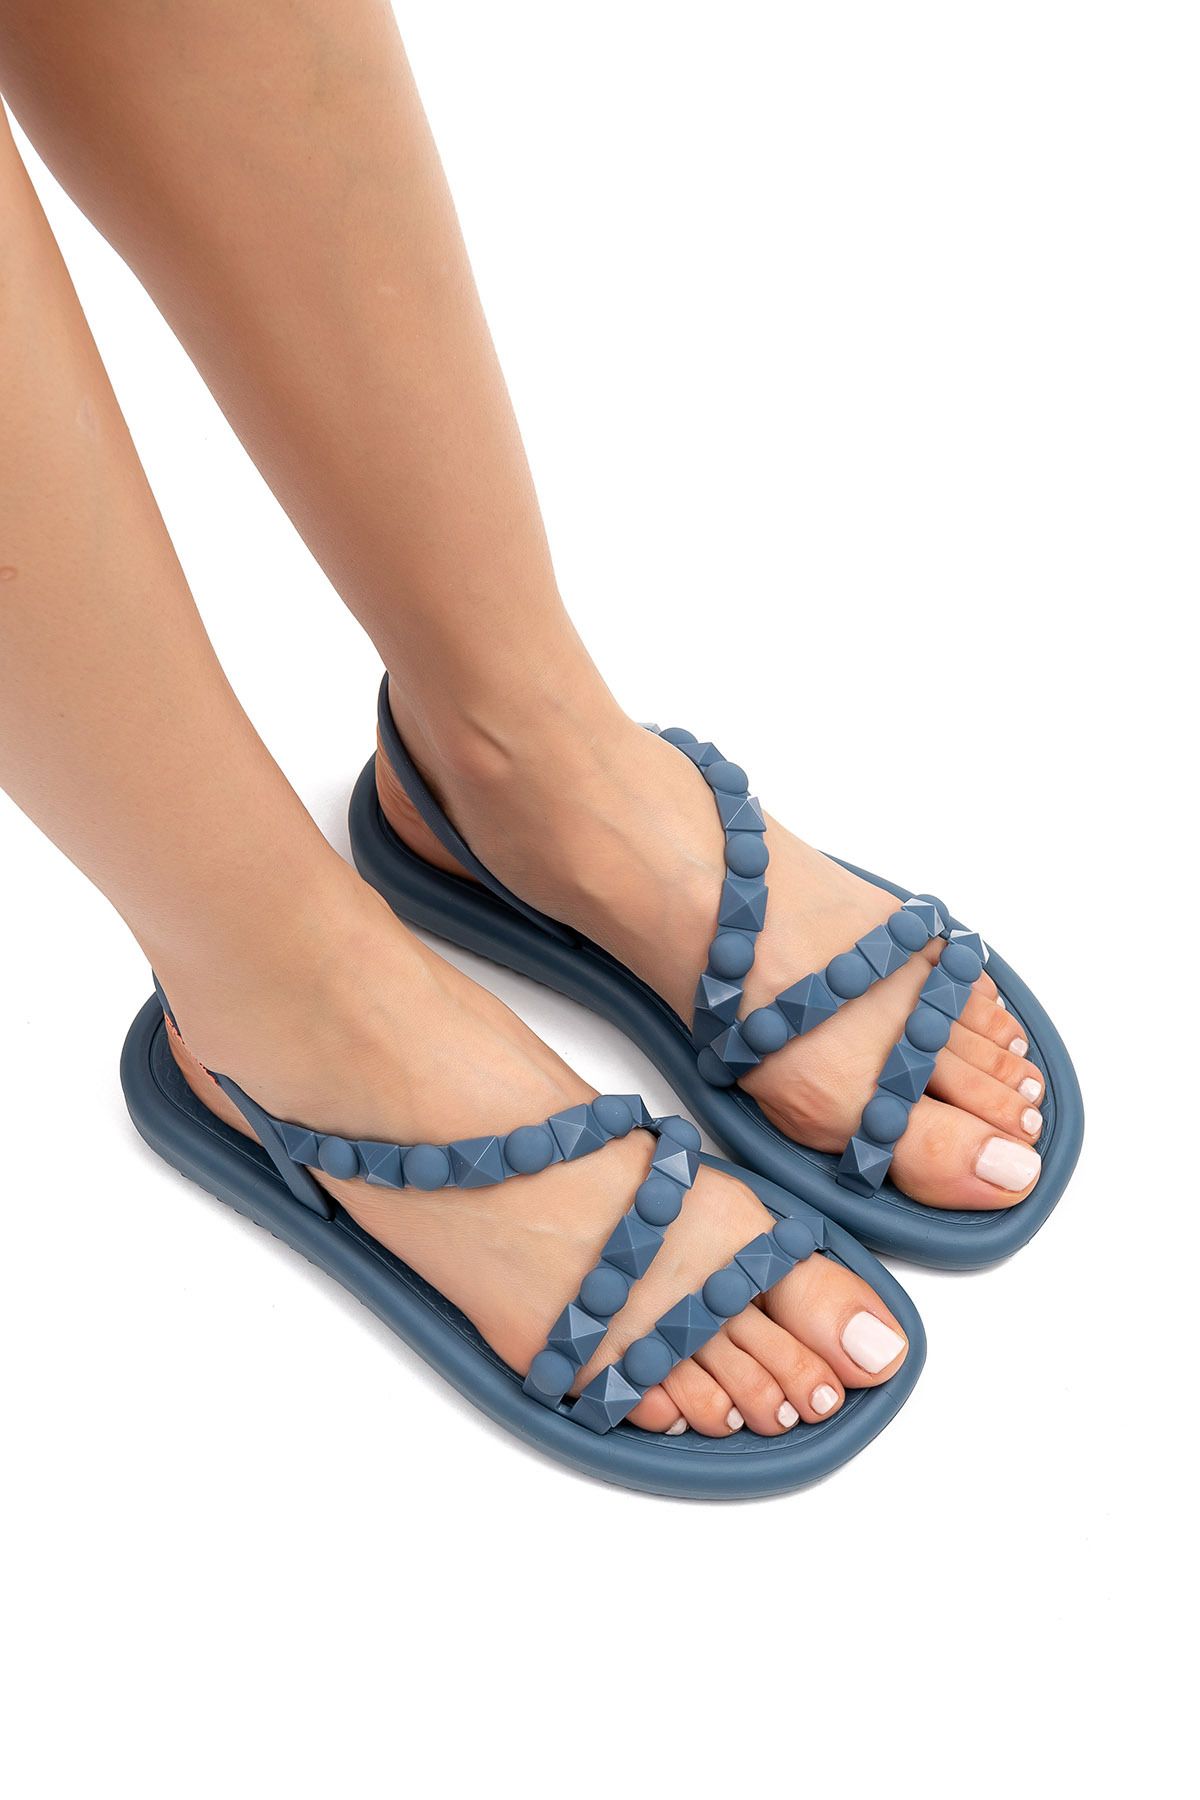 İpanema Meu Sol Flatform Kadın Sandalet Mavi 35/42